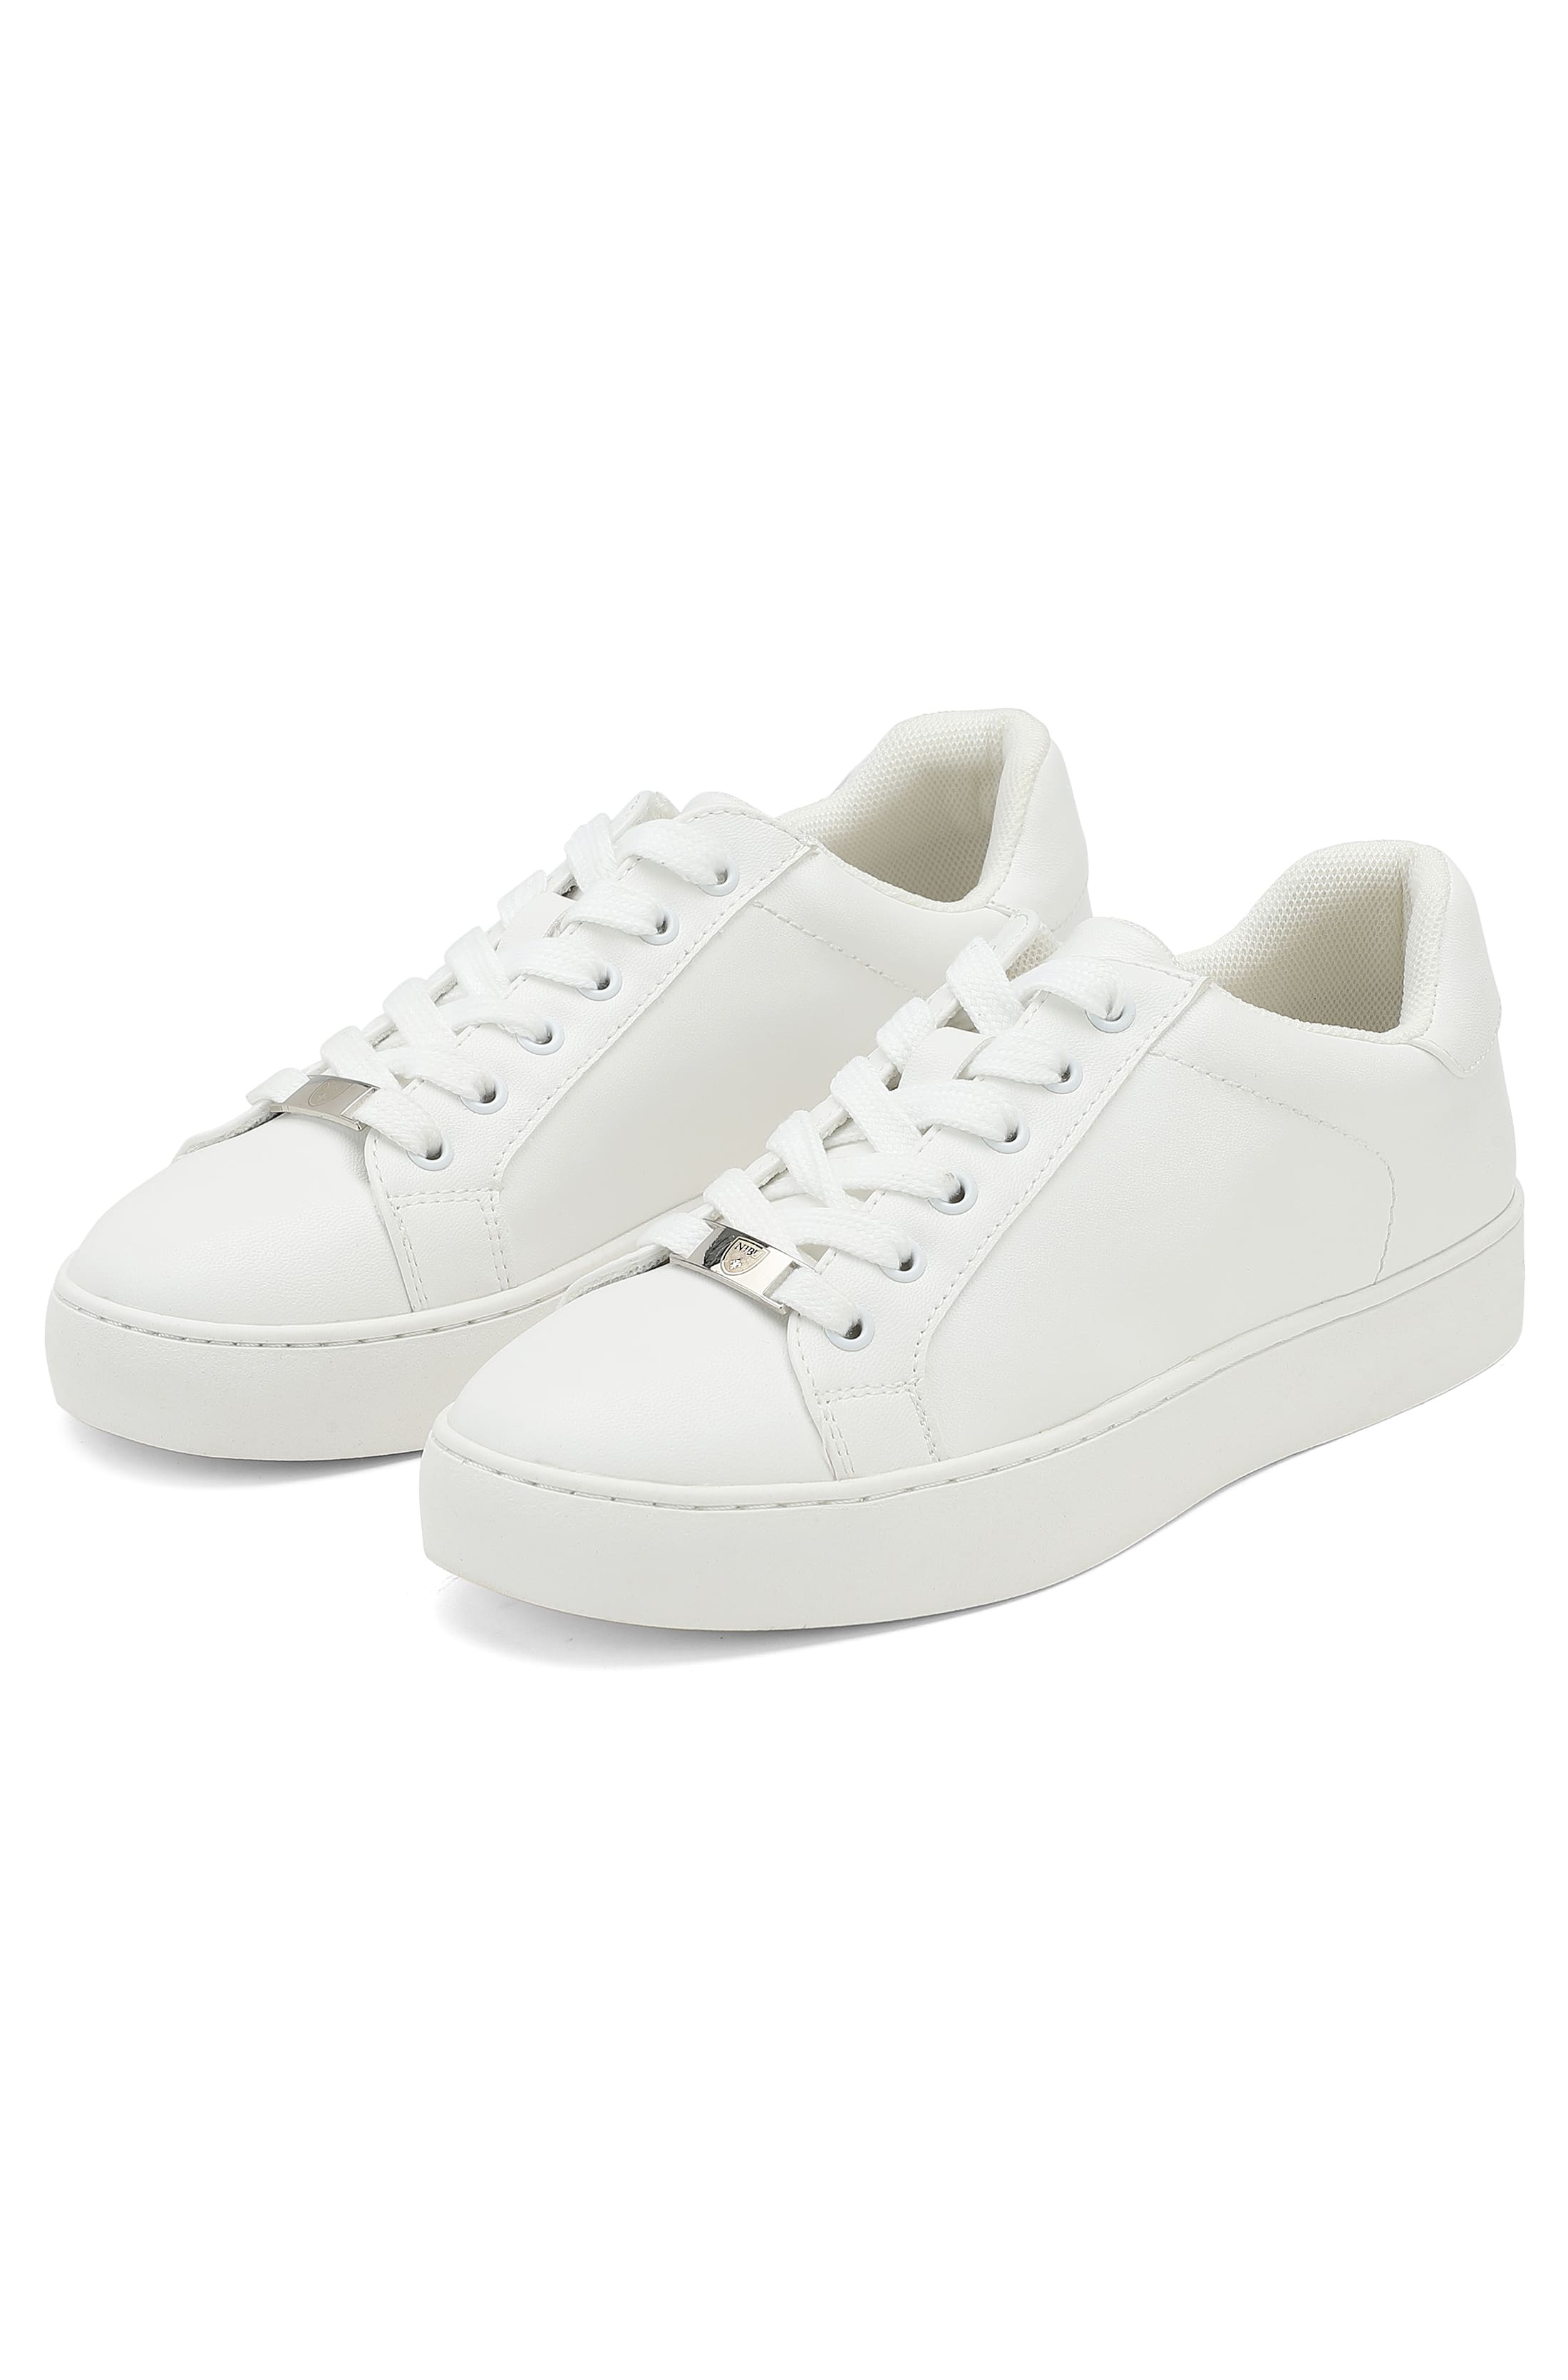 beautiful white shoes